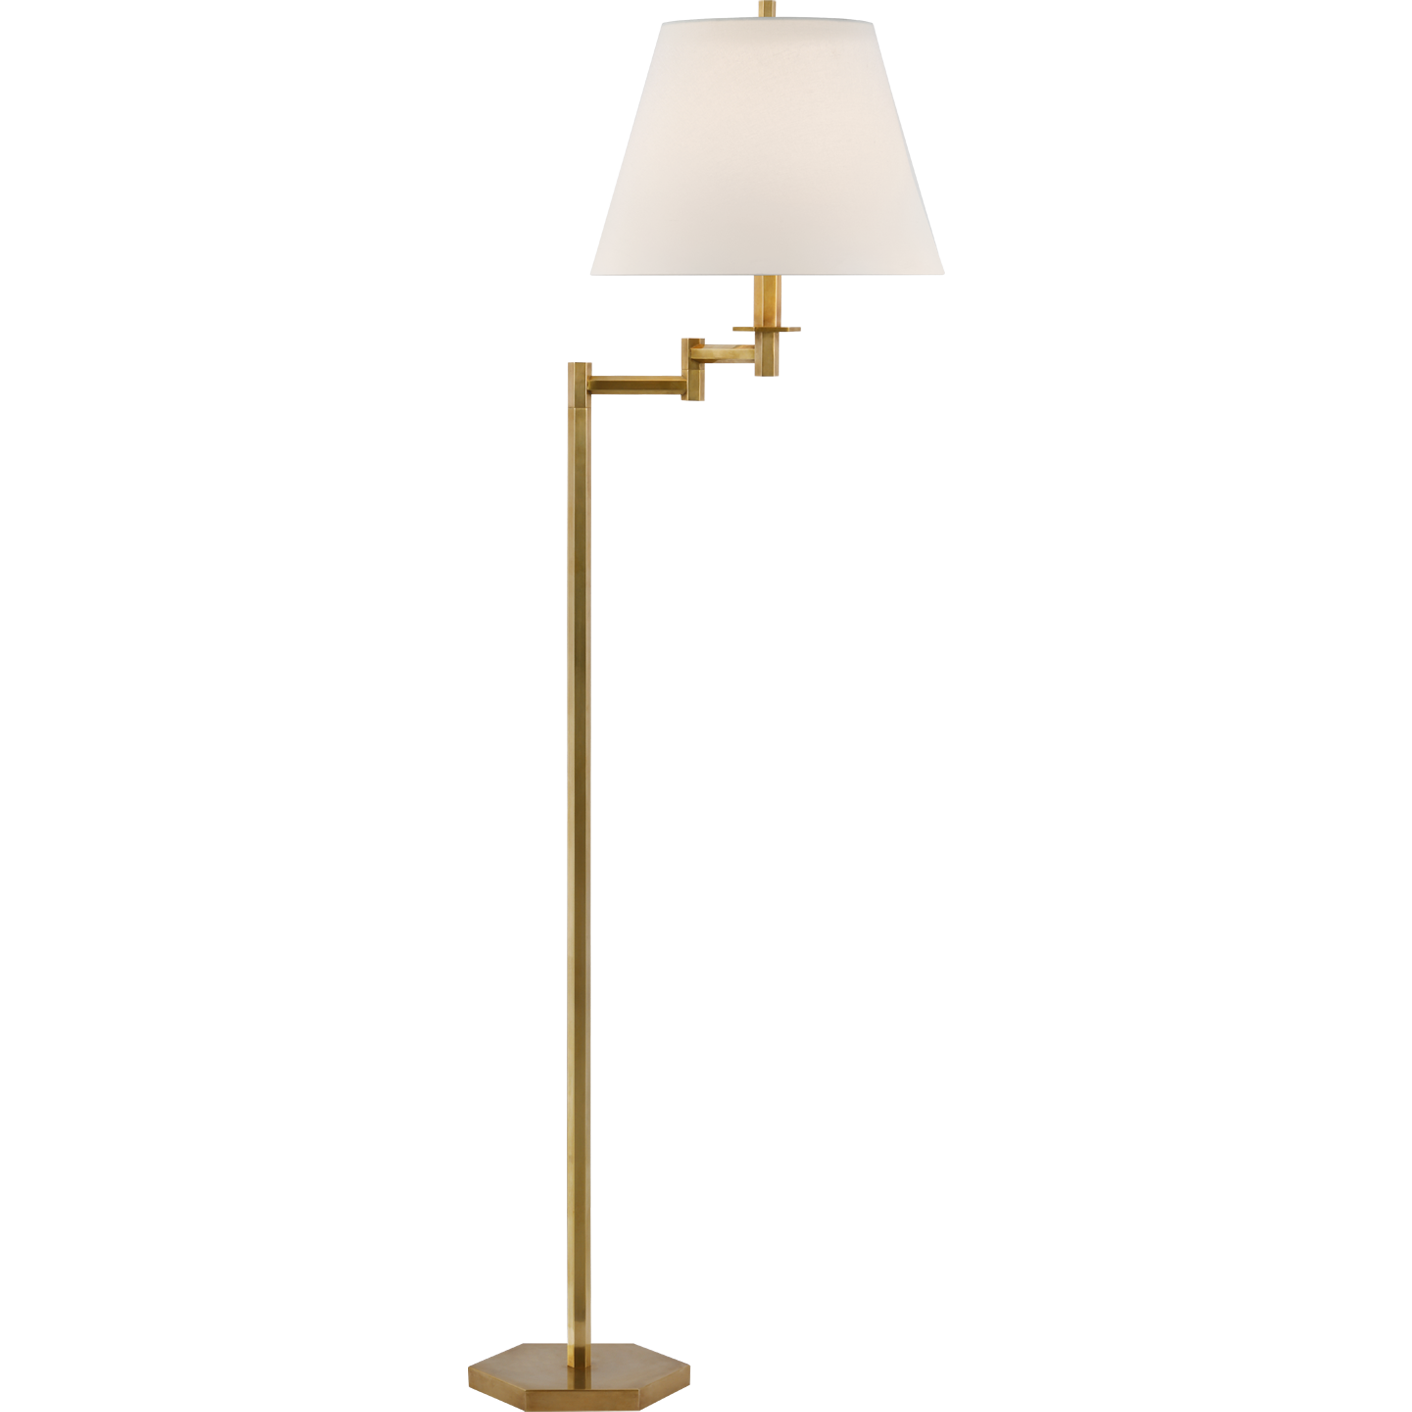 Olivier Large Swing Arm Floor Lamp